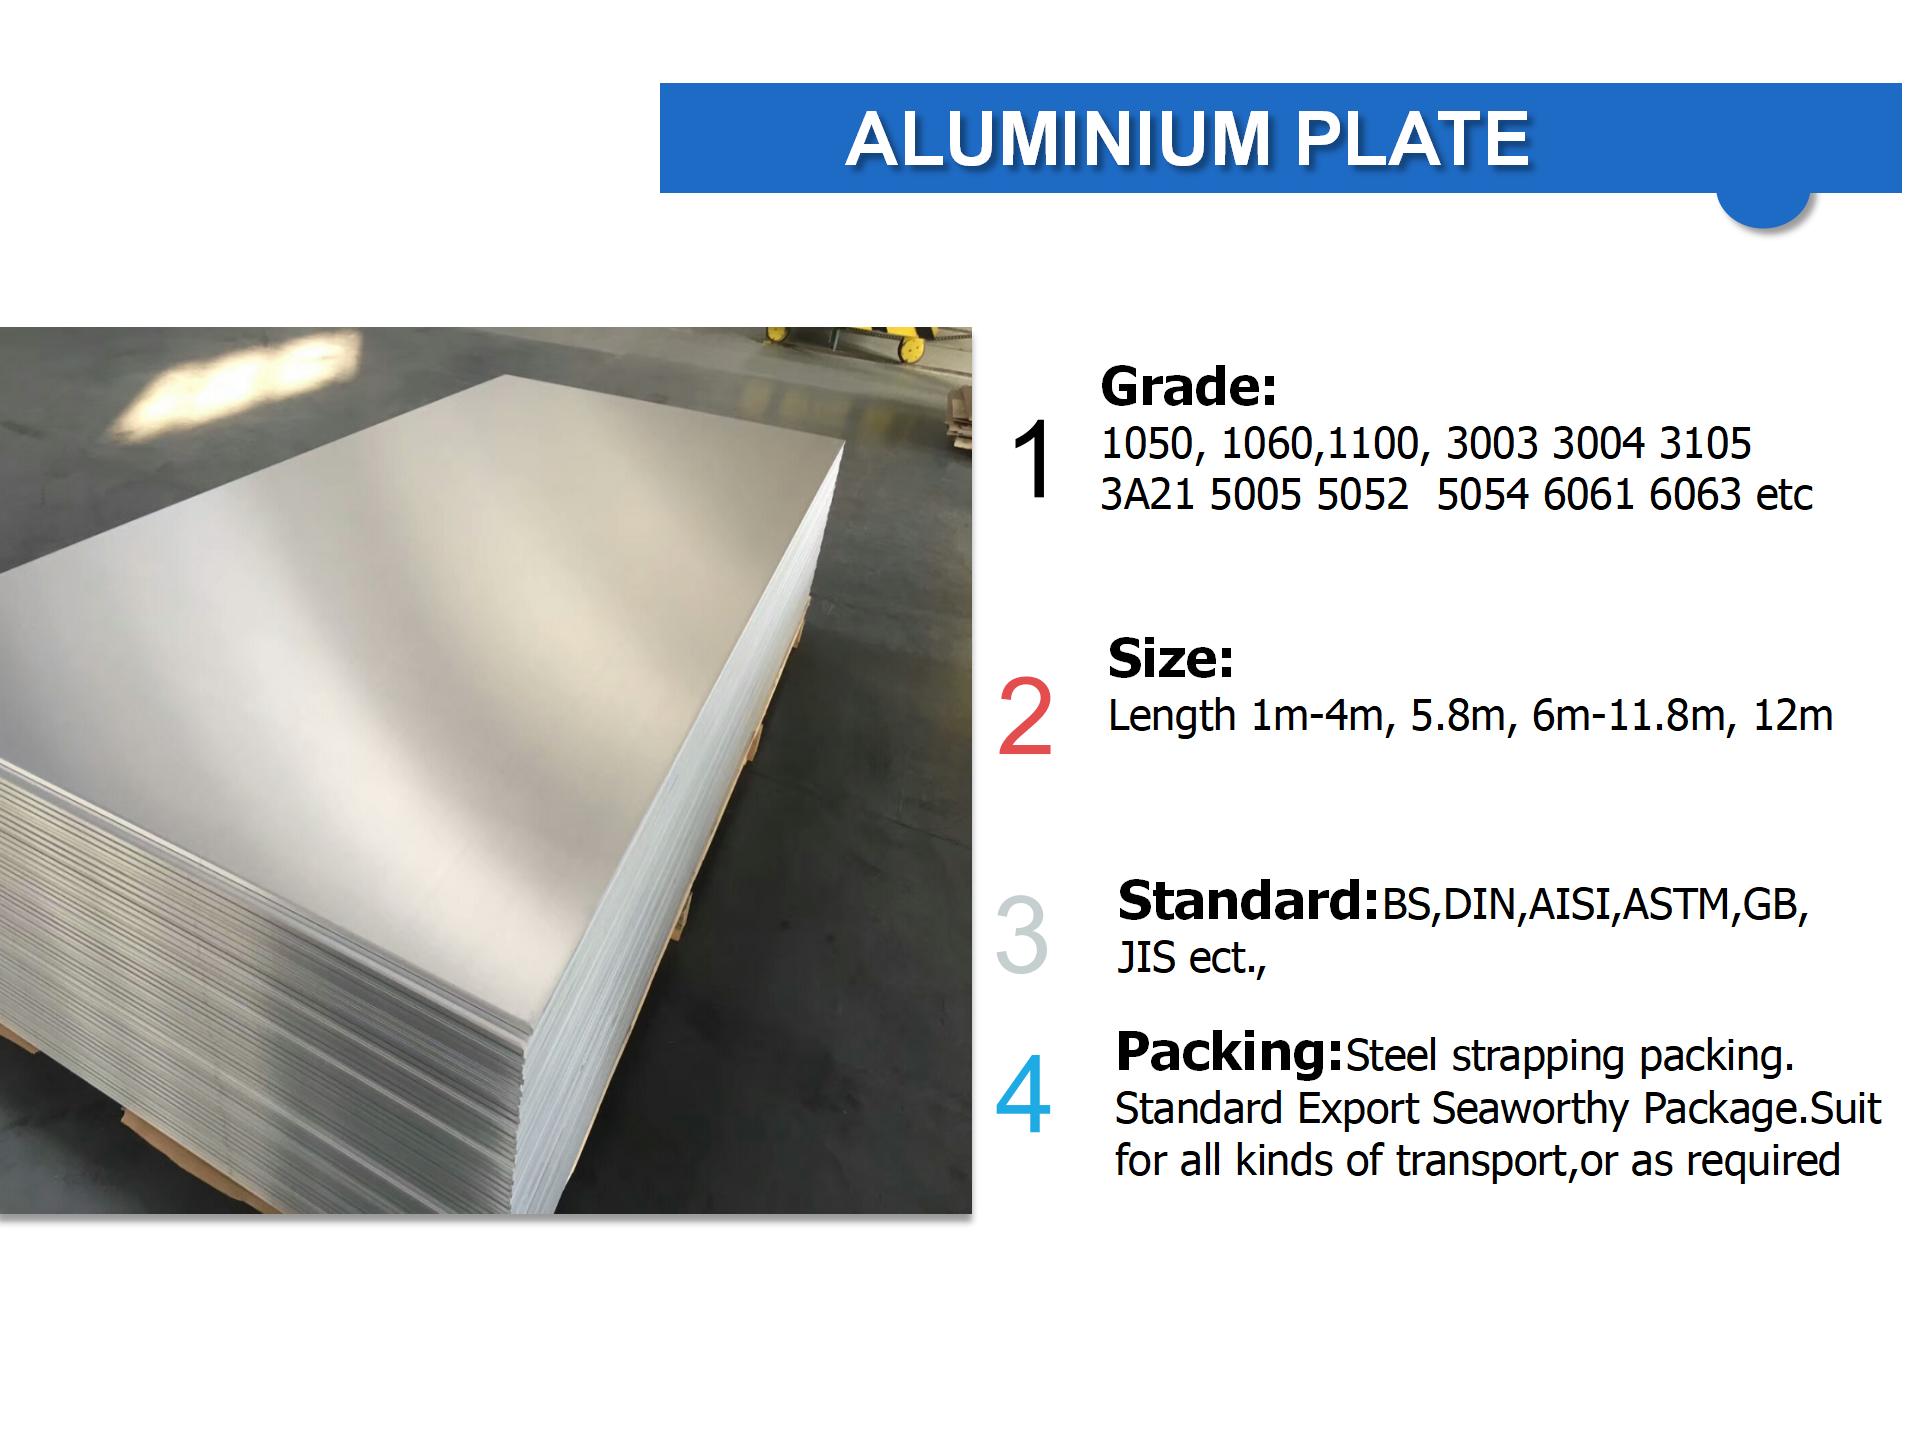 Aluminium plate